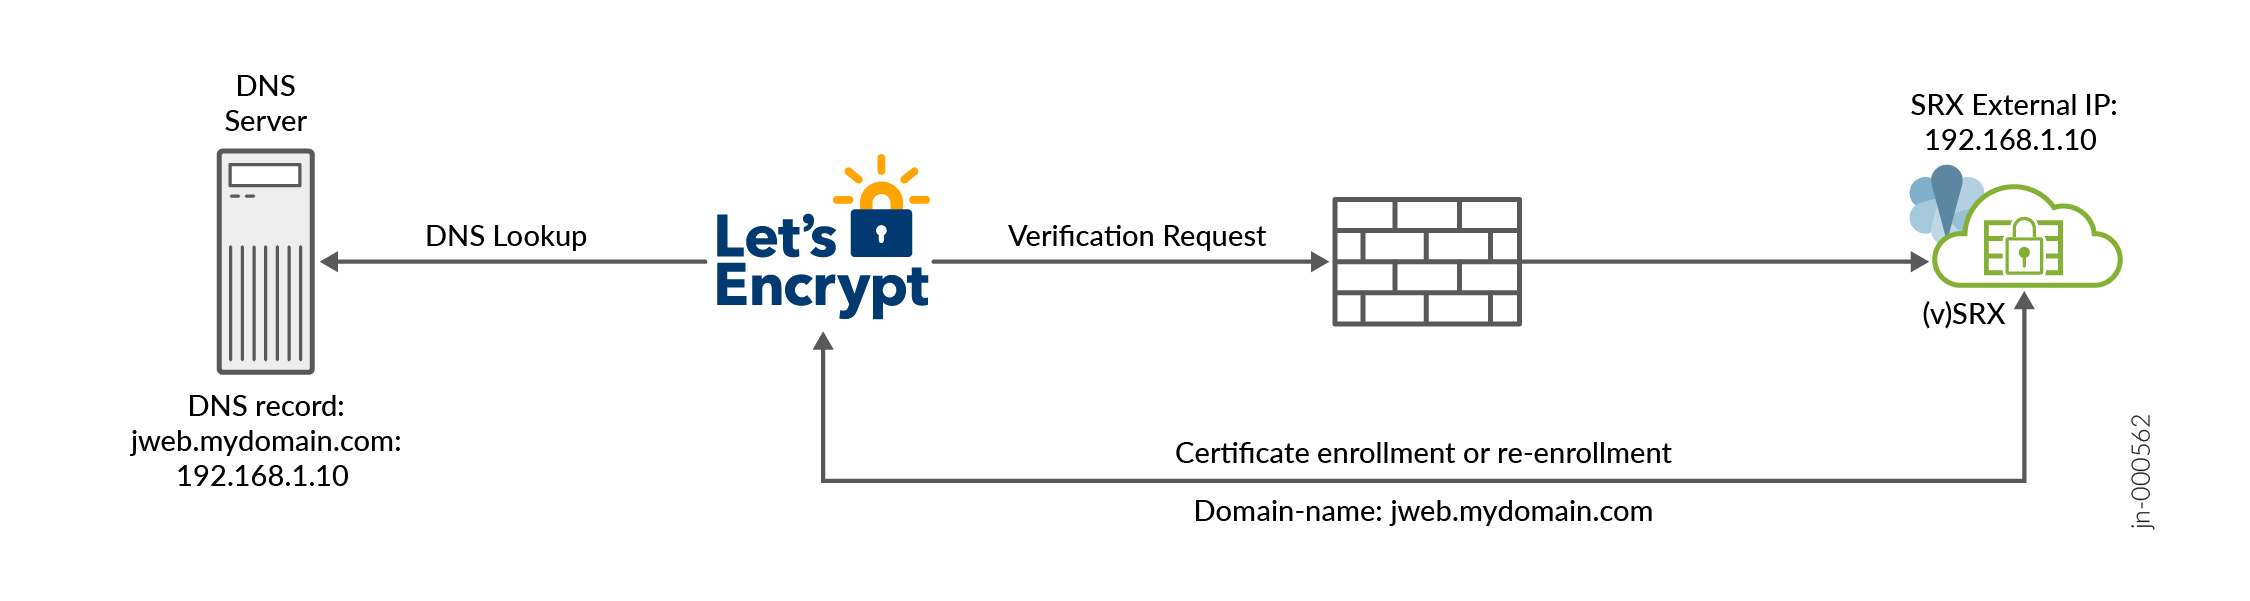 Name Resolution for Let's Encrypt